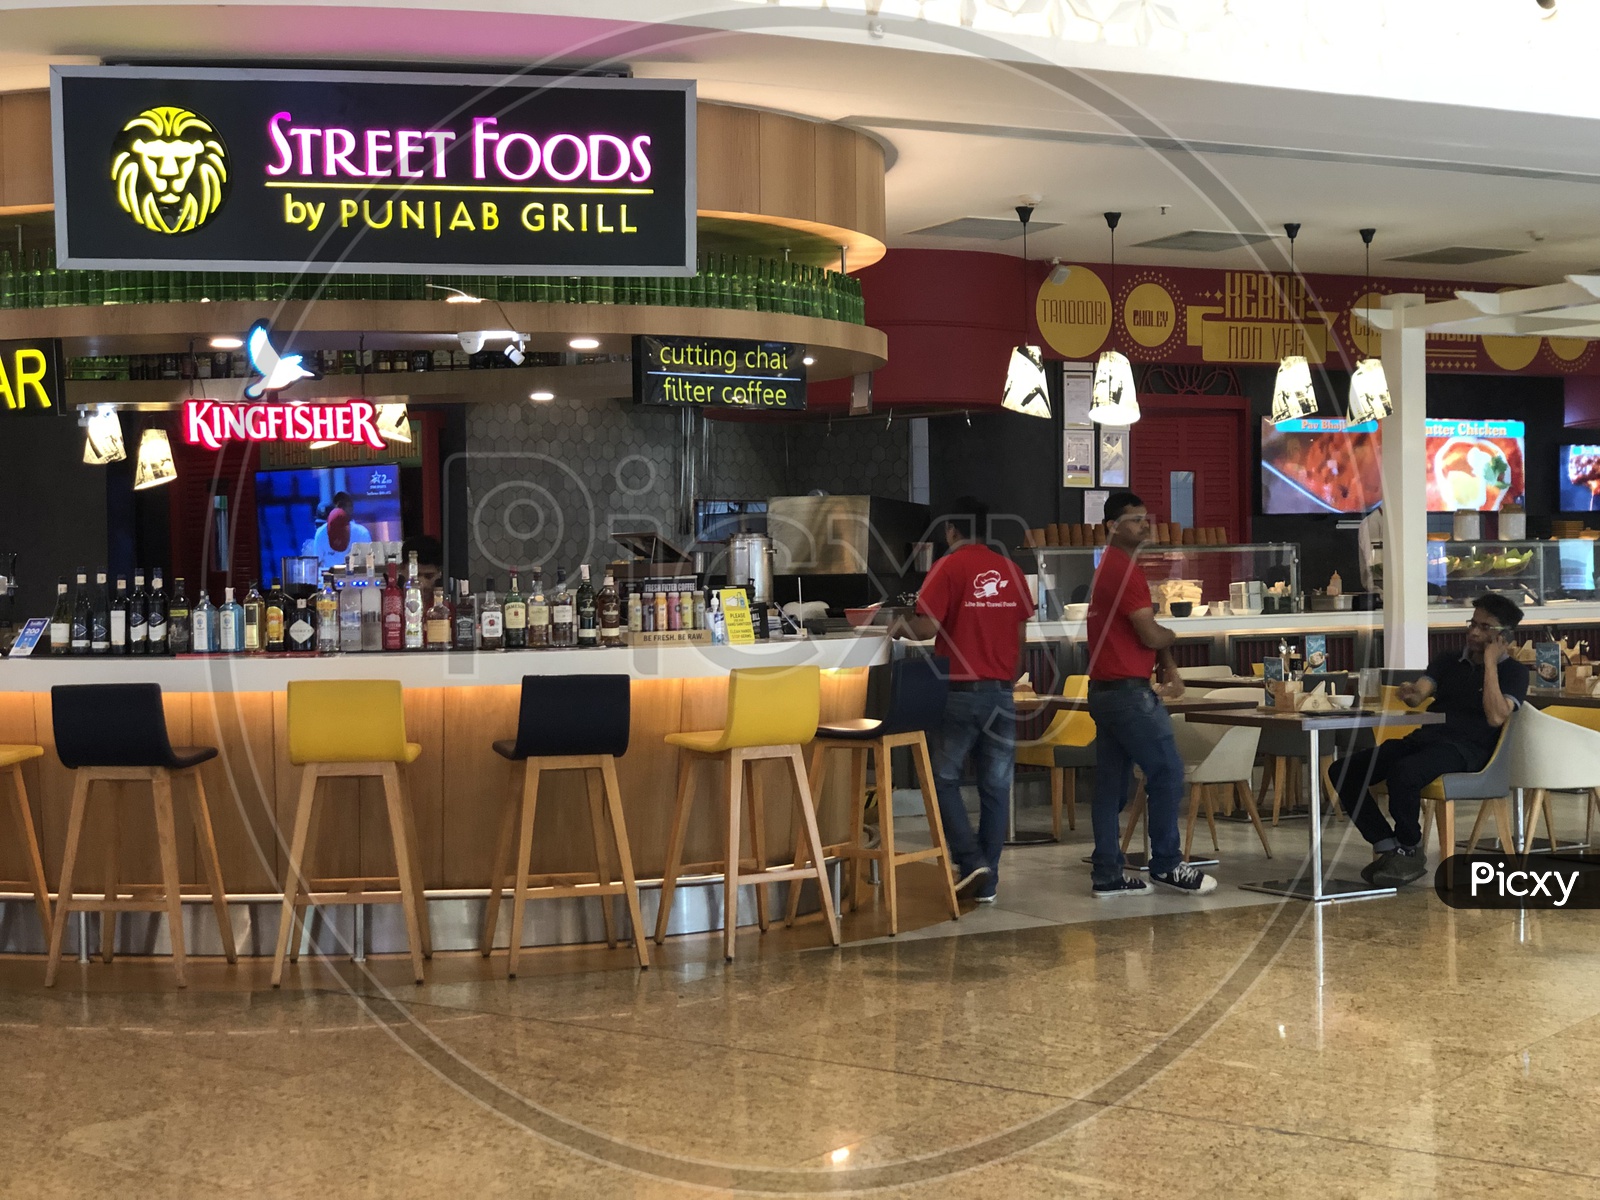 Street Foods by Punjab Grill At Mumbai Terminal 2 Airport